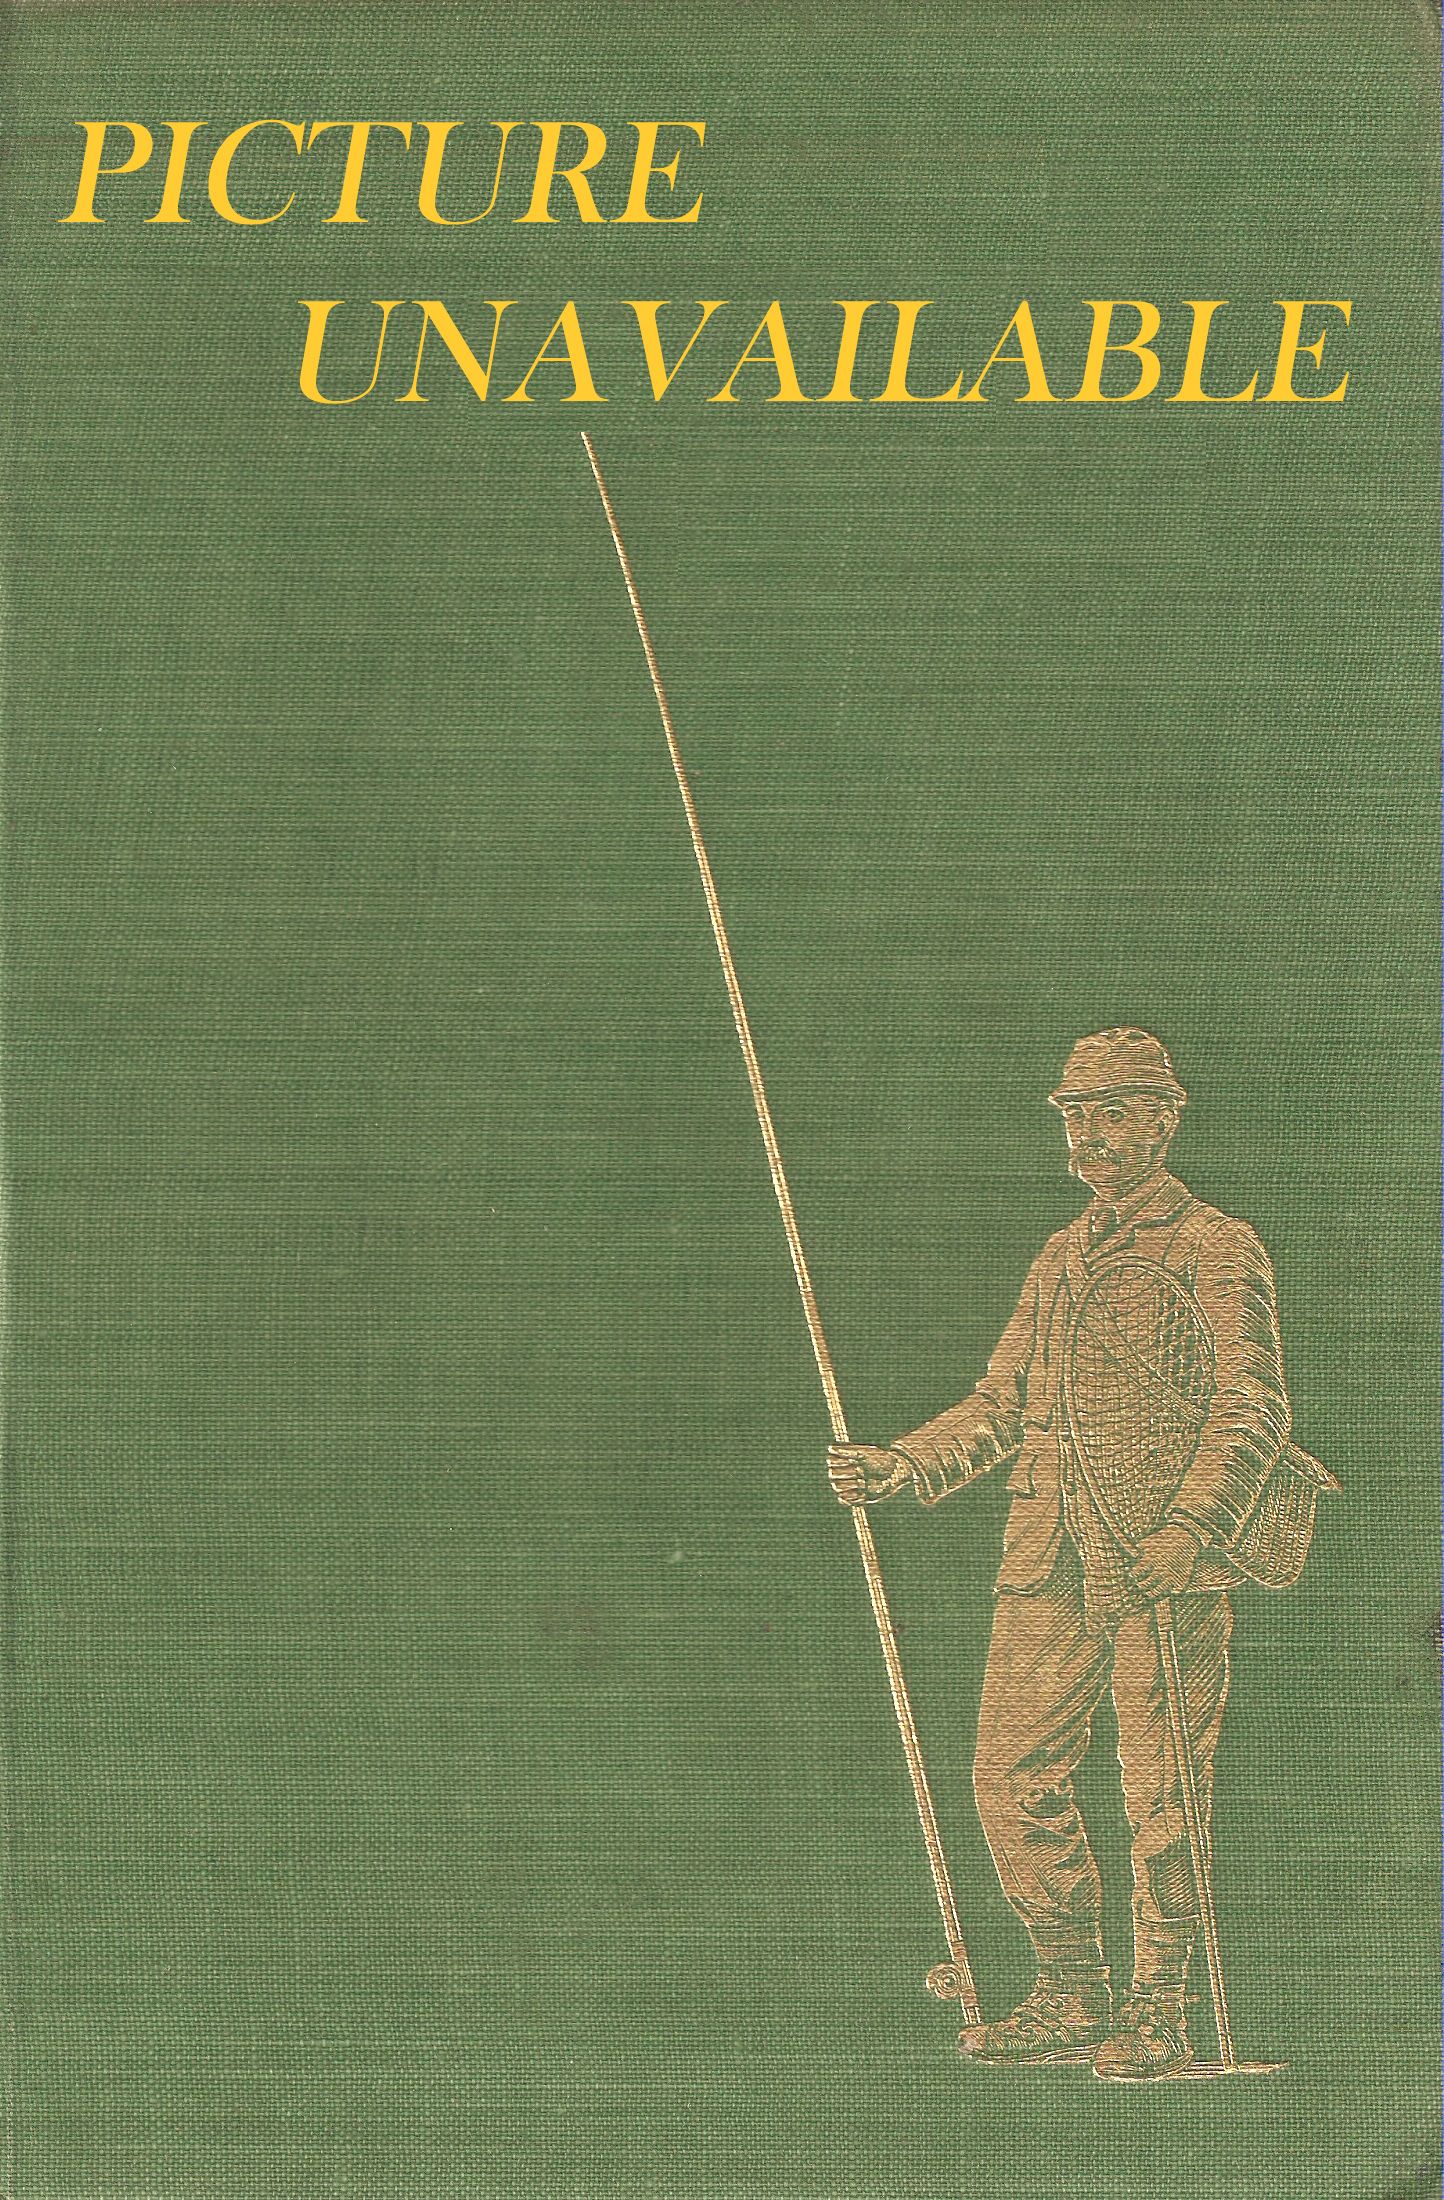 Coarse Fishing on Stillwaters (Concorde fishing books)